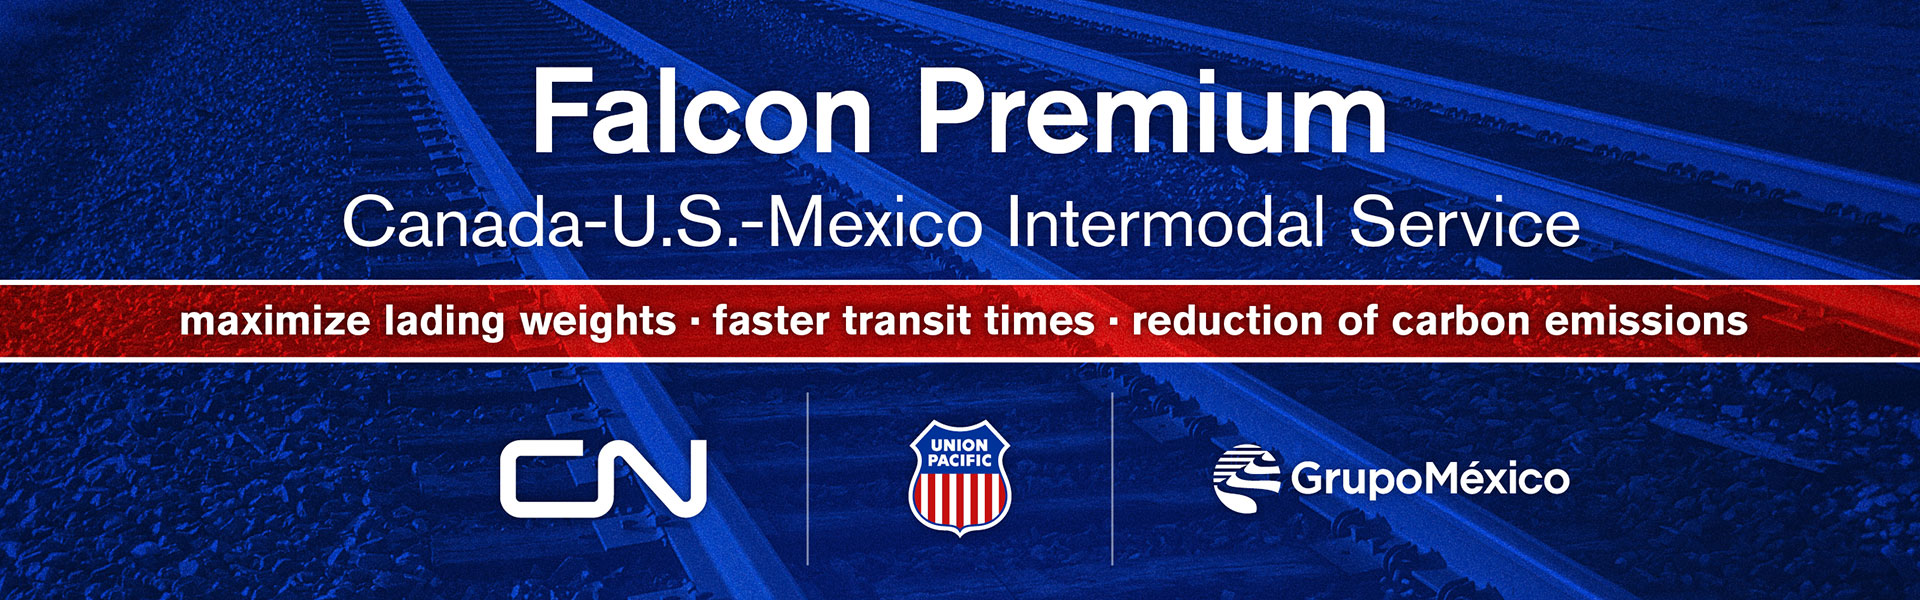 Falcon Premium Service from Union Pacific, CN and GrupoMexico